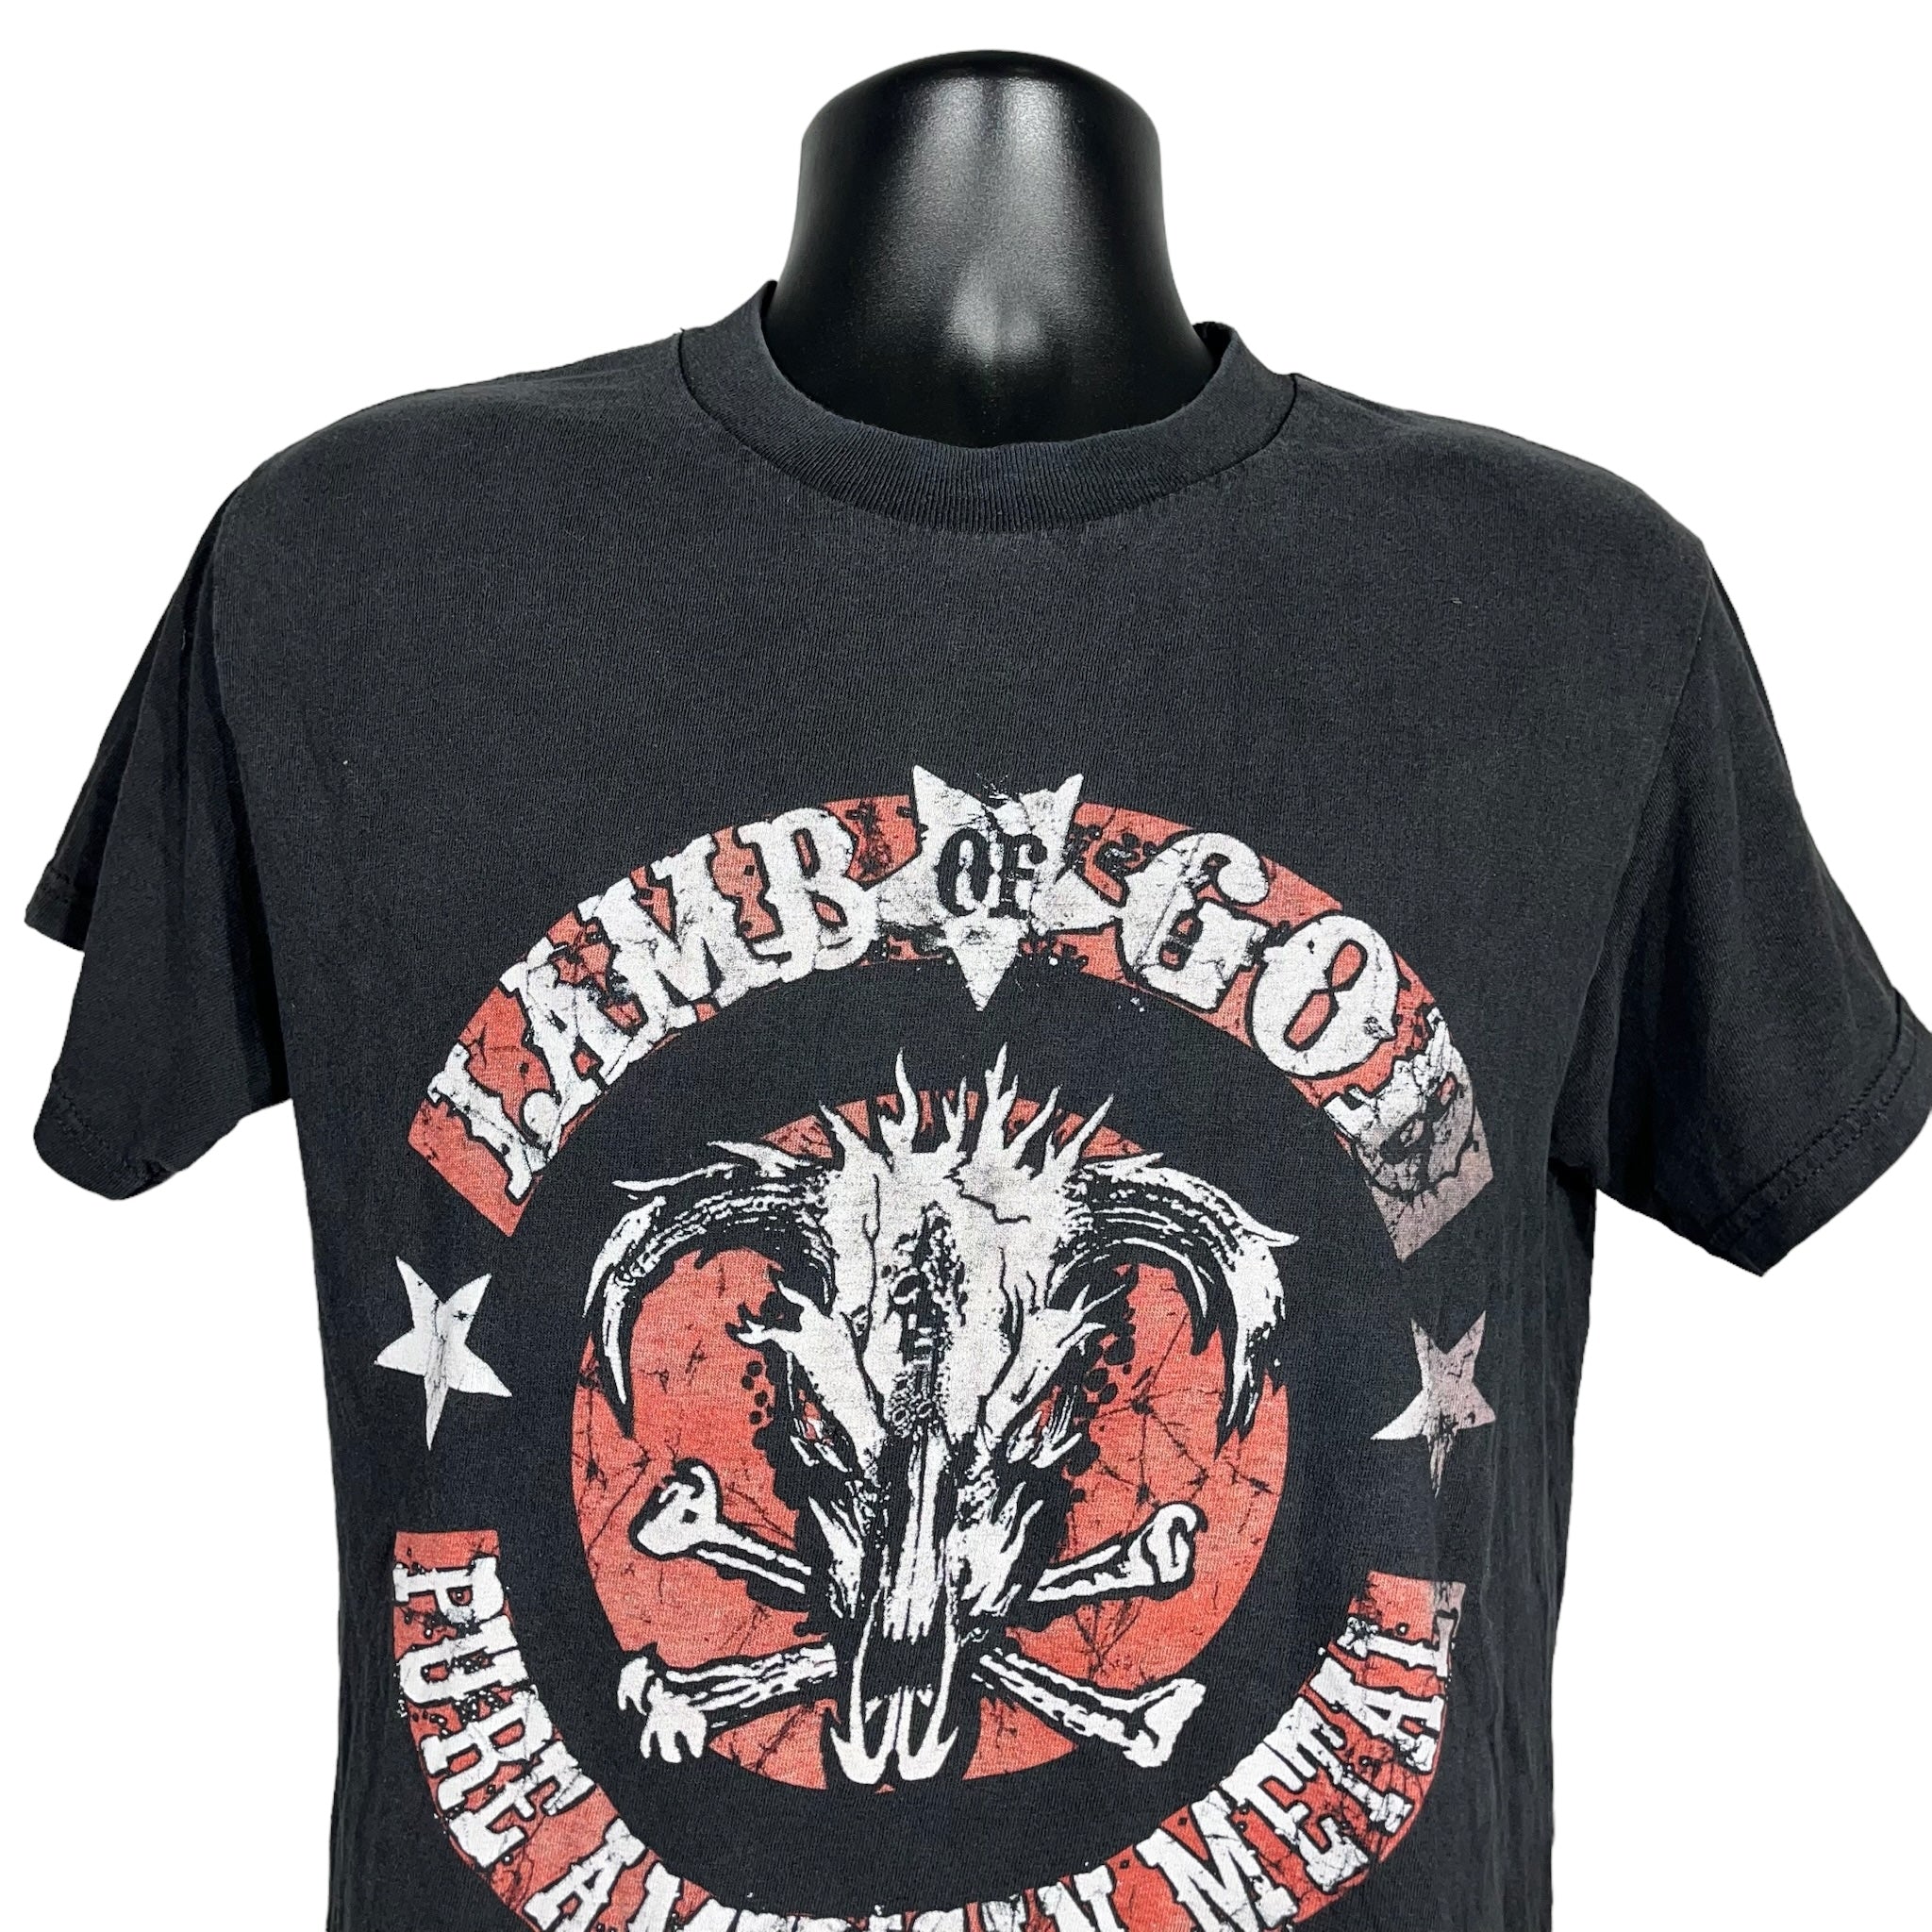 Lamb Of God "Pure American Metal" Band Tee